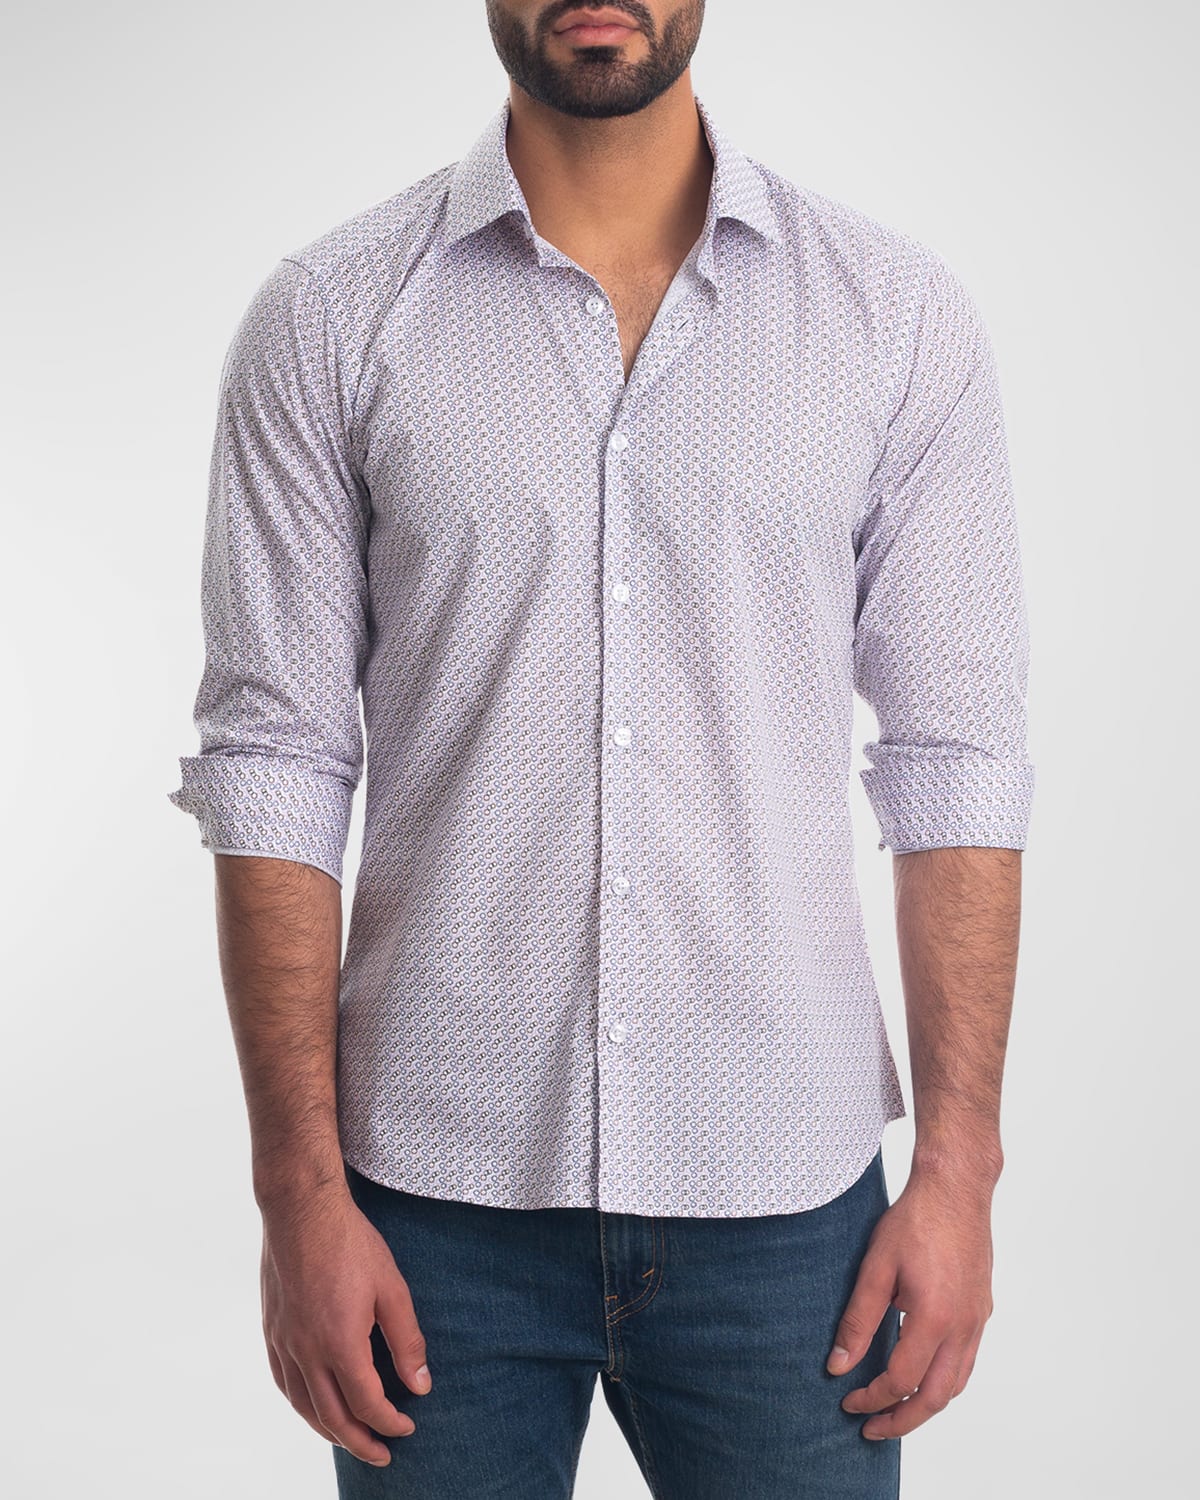 Men's Patterned Button-Down Shirt